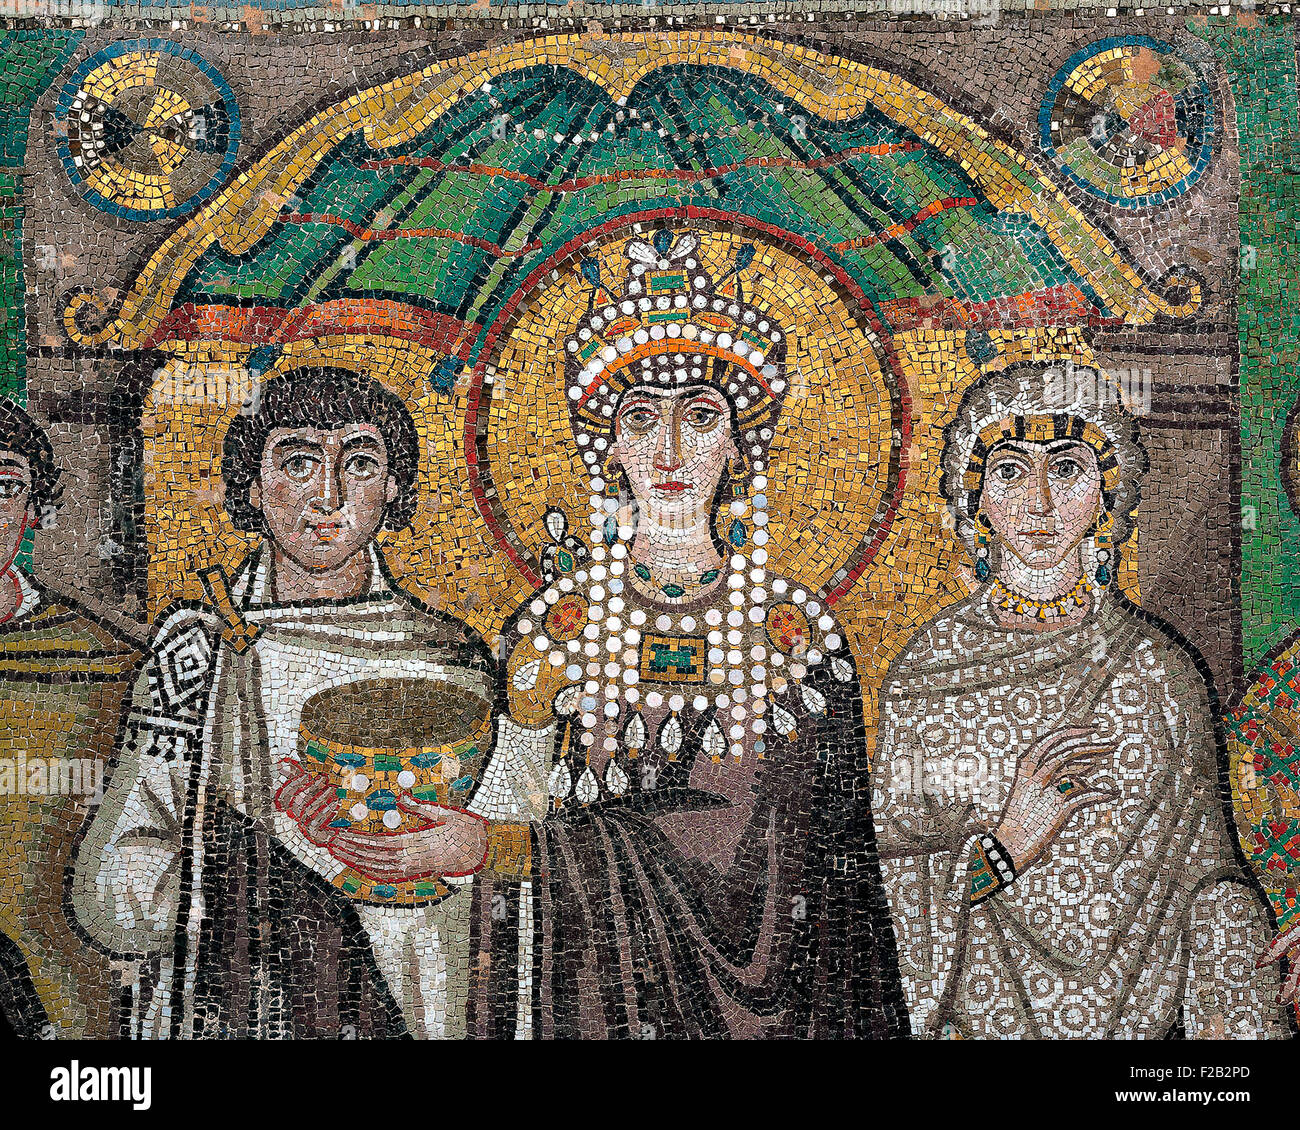 Empress theodora mosaic hi-res stock photography and images - Alamy